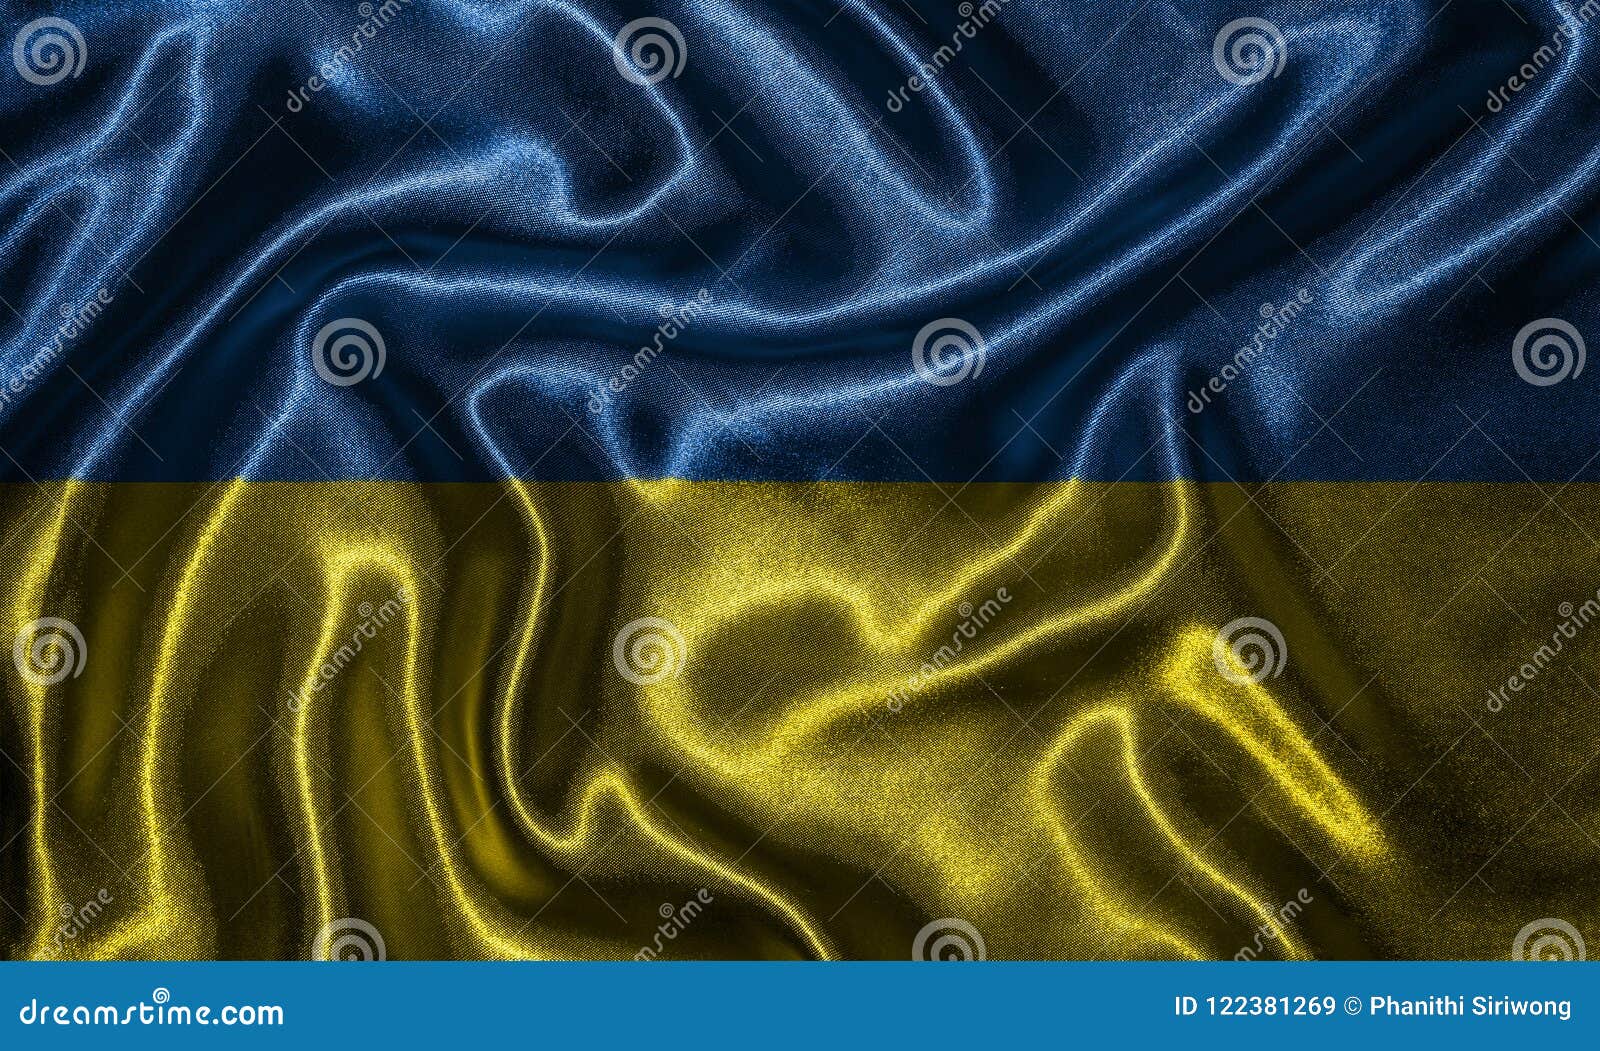 171856 Ukrainian Flag Images Stock Photos  Vectors  Shutterstock